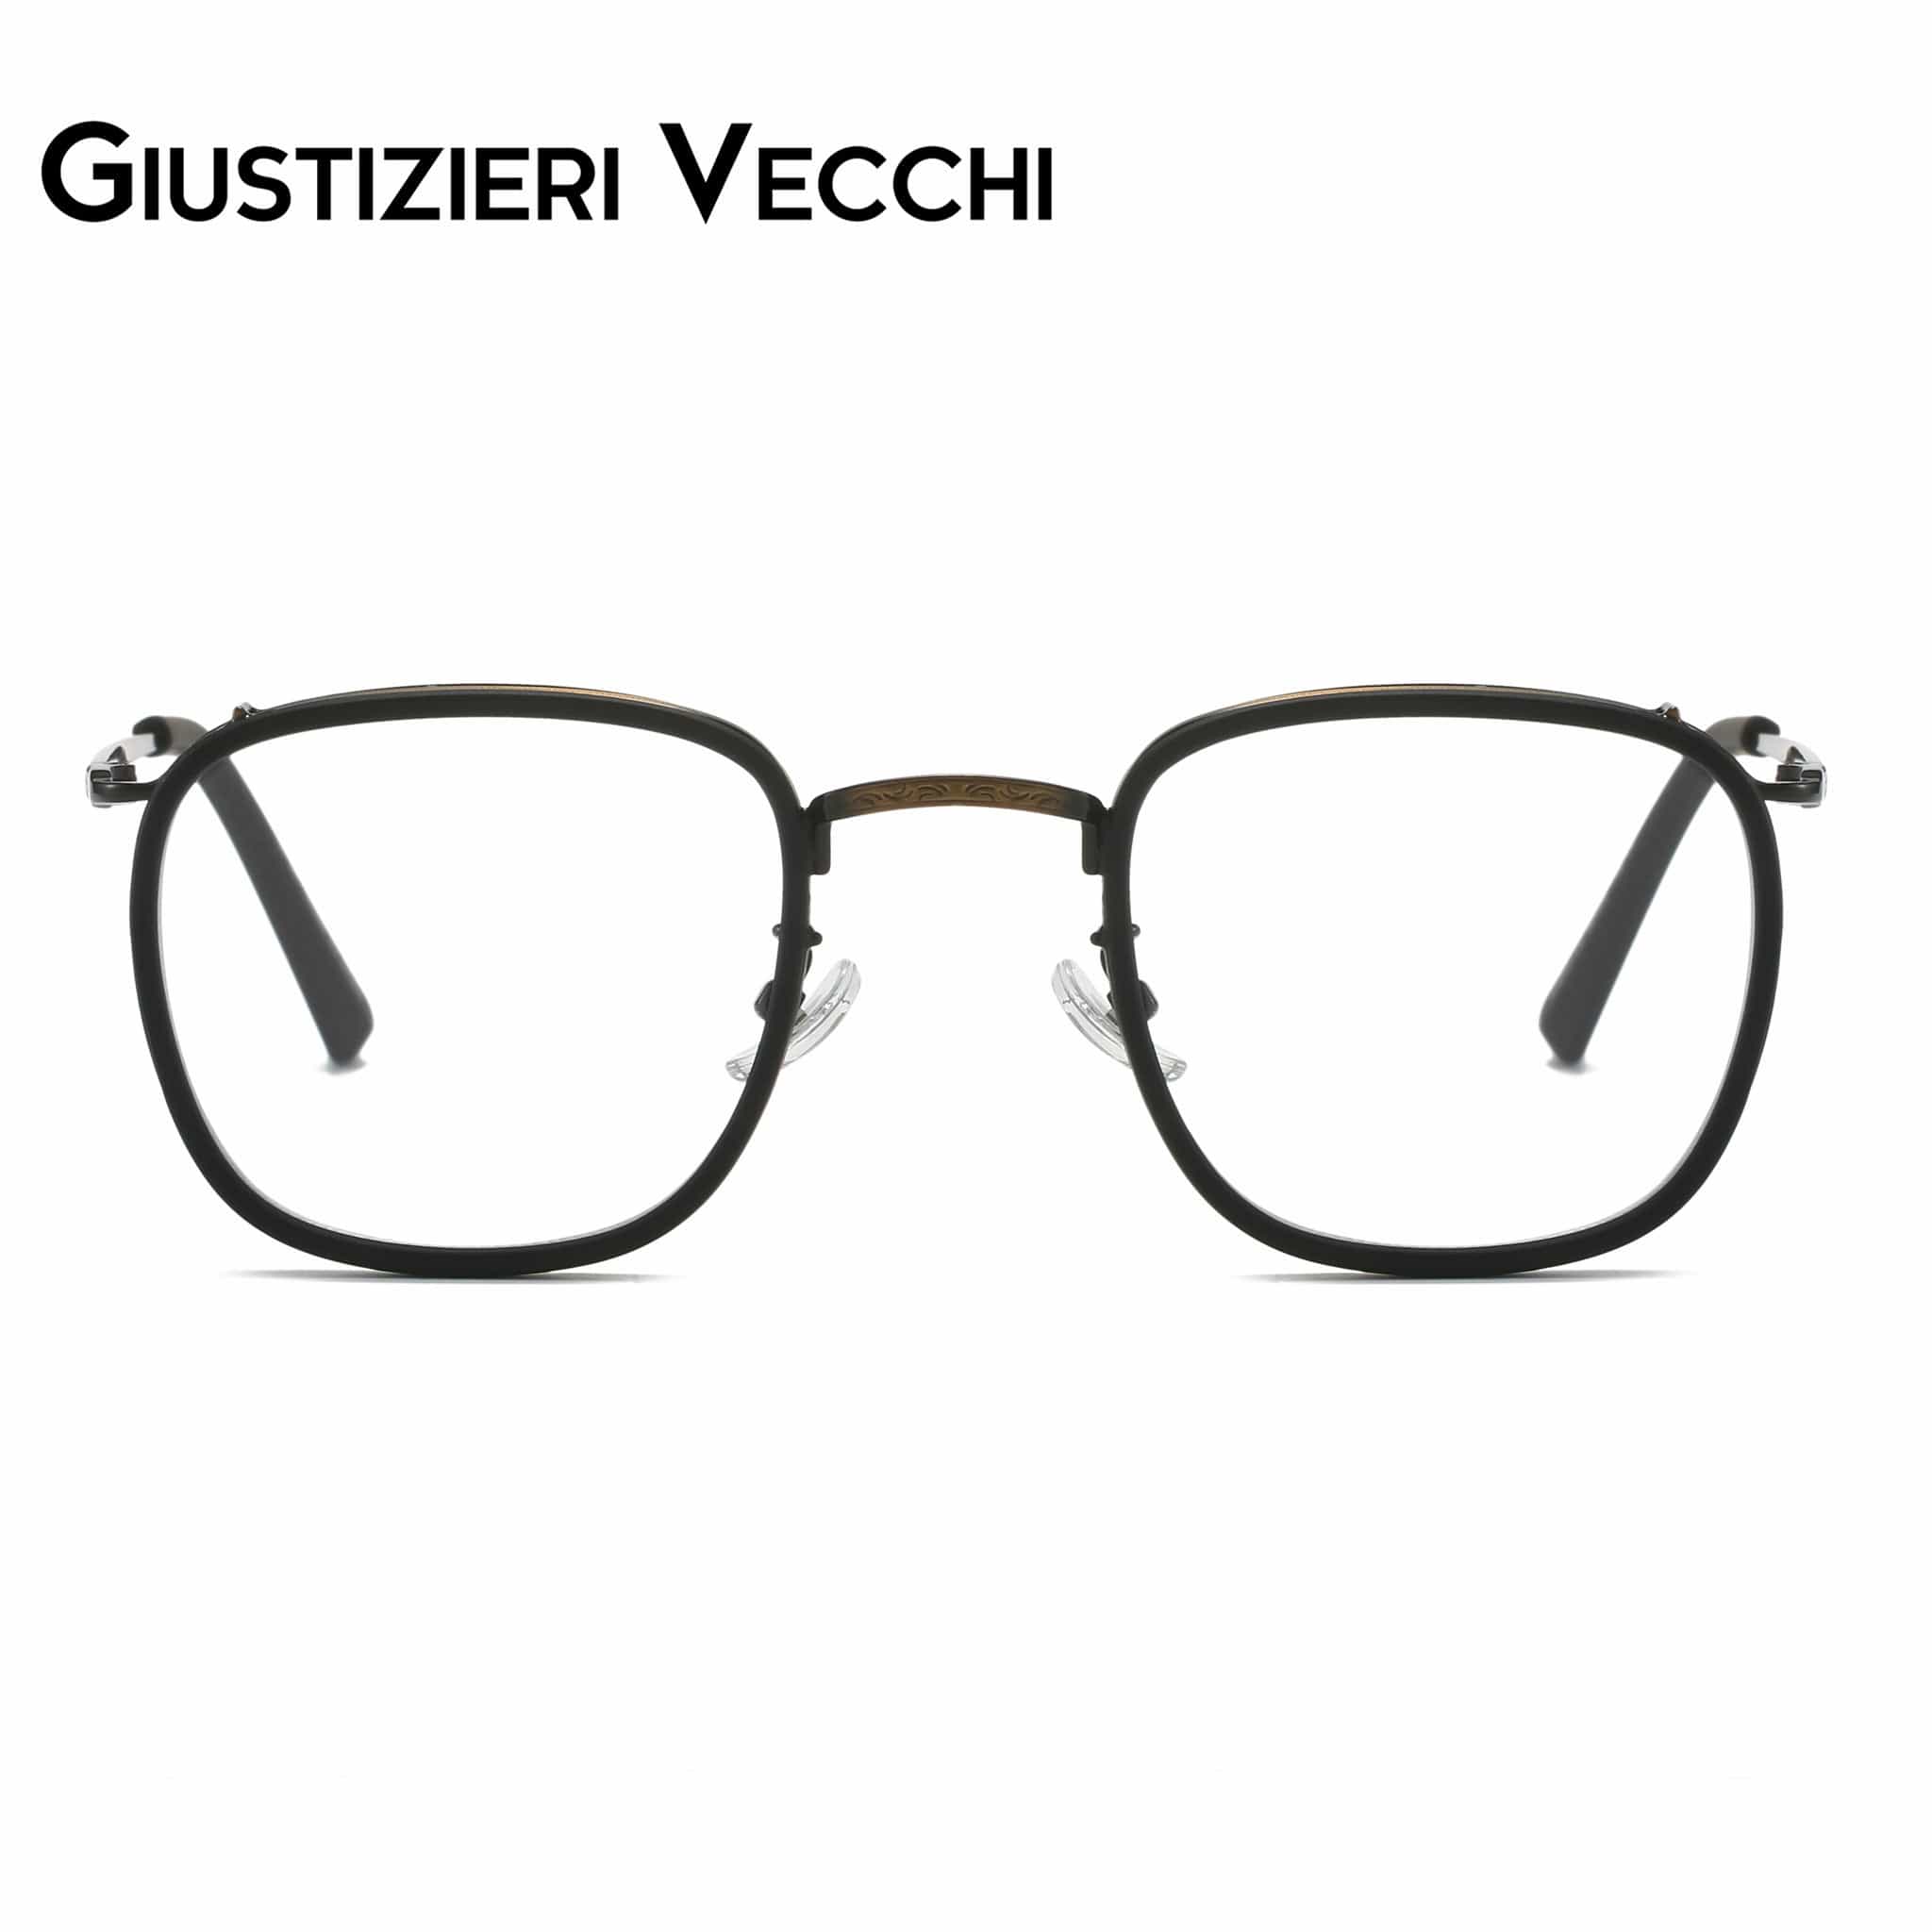 GIUSTIZIERI VECCHI Eyeglasses Brushed Gunmatal / Small Starry Night Uno